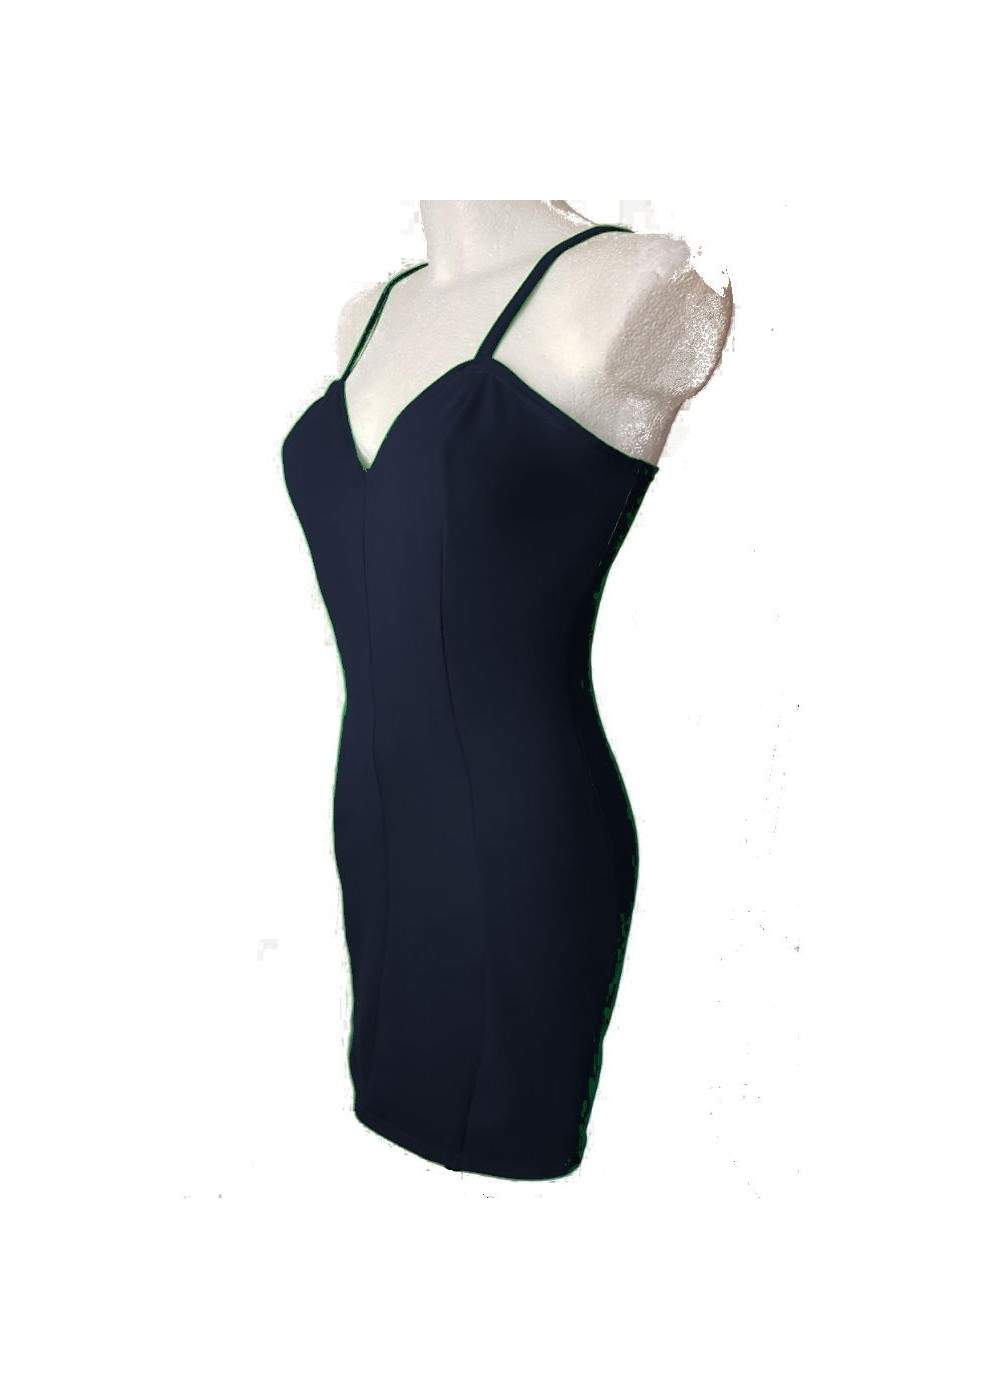 black week Save 15% Blue Stretch Cotton Strap Dress CockTeildress S... - 